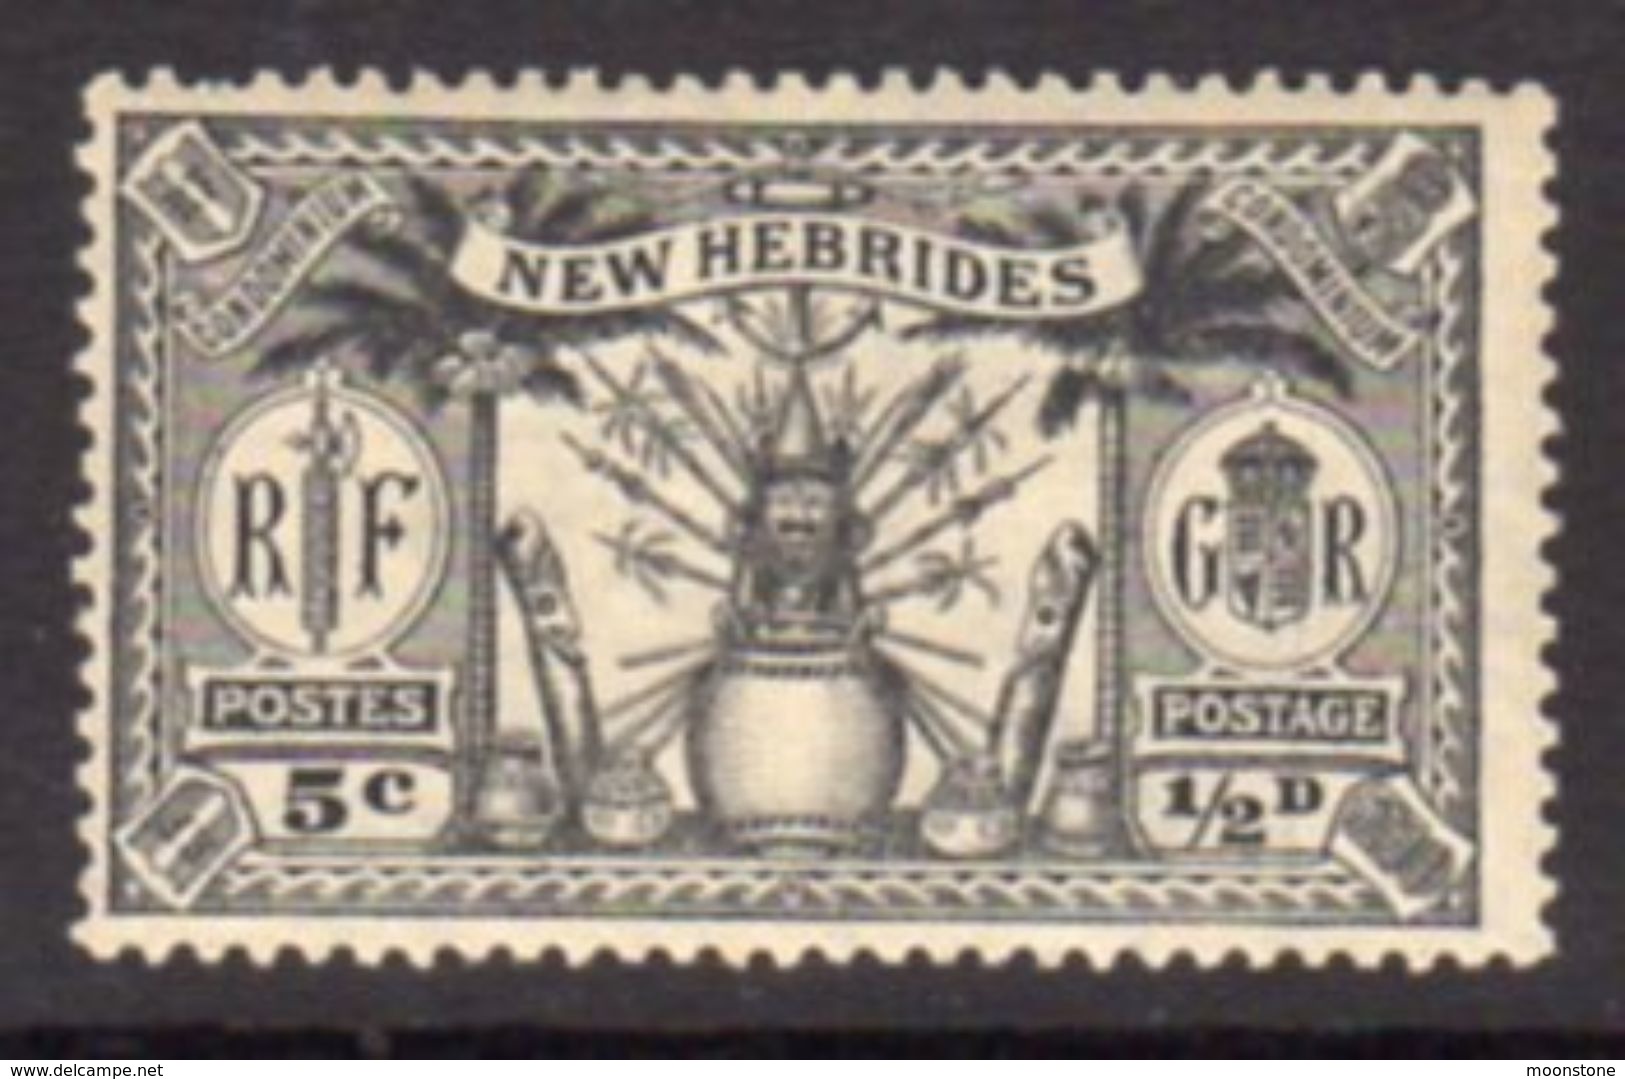 New Hebrides 1925 Dual Currency ½d/5c Value, Wmk. Mult. Script CA, Hinged Mint, SG 43 - Unused Stamps